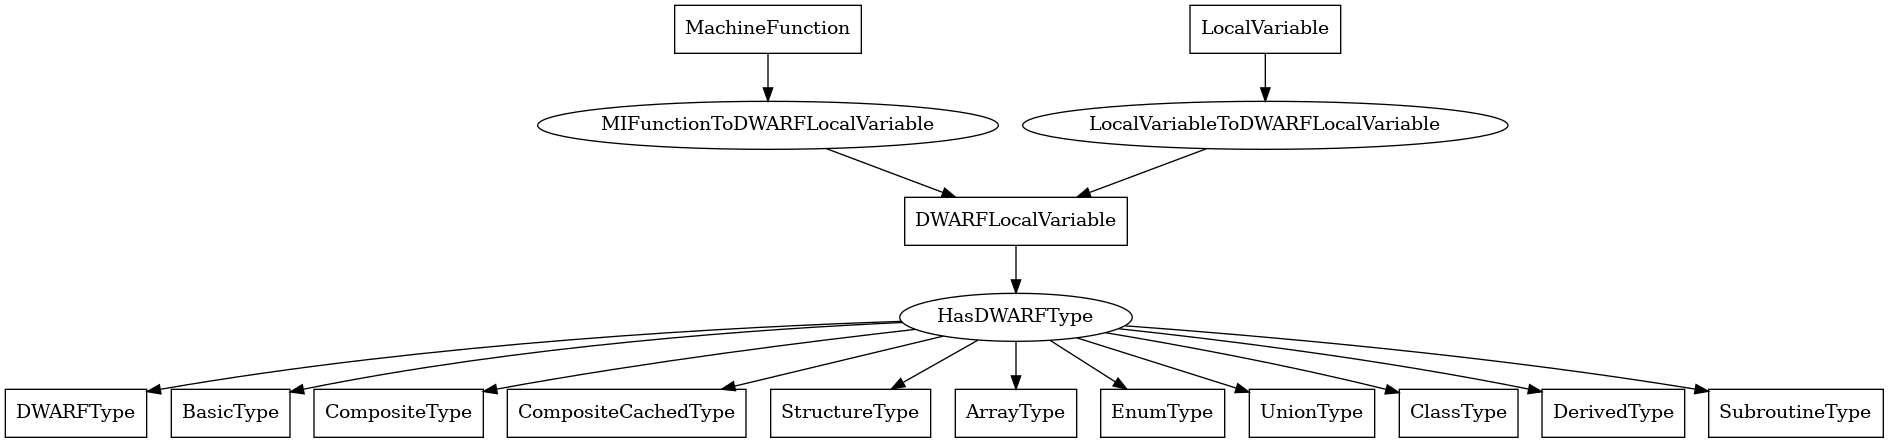 Entity-relationship diagram for DWARFLocalVariable nodes